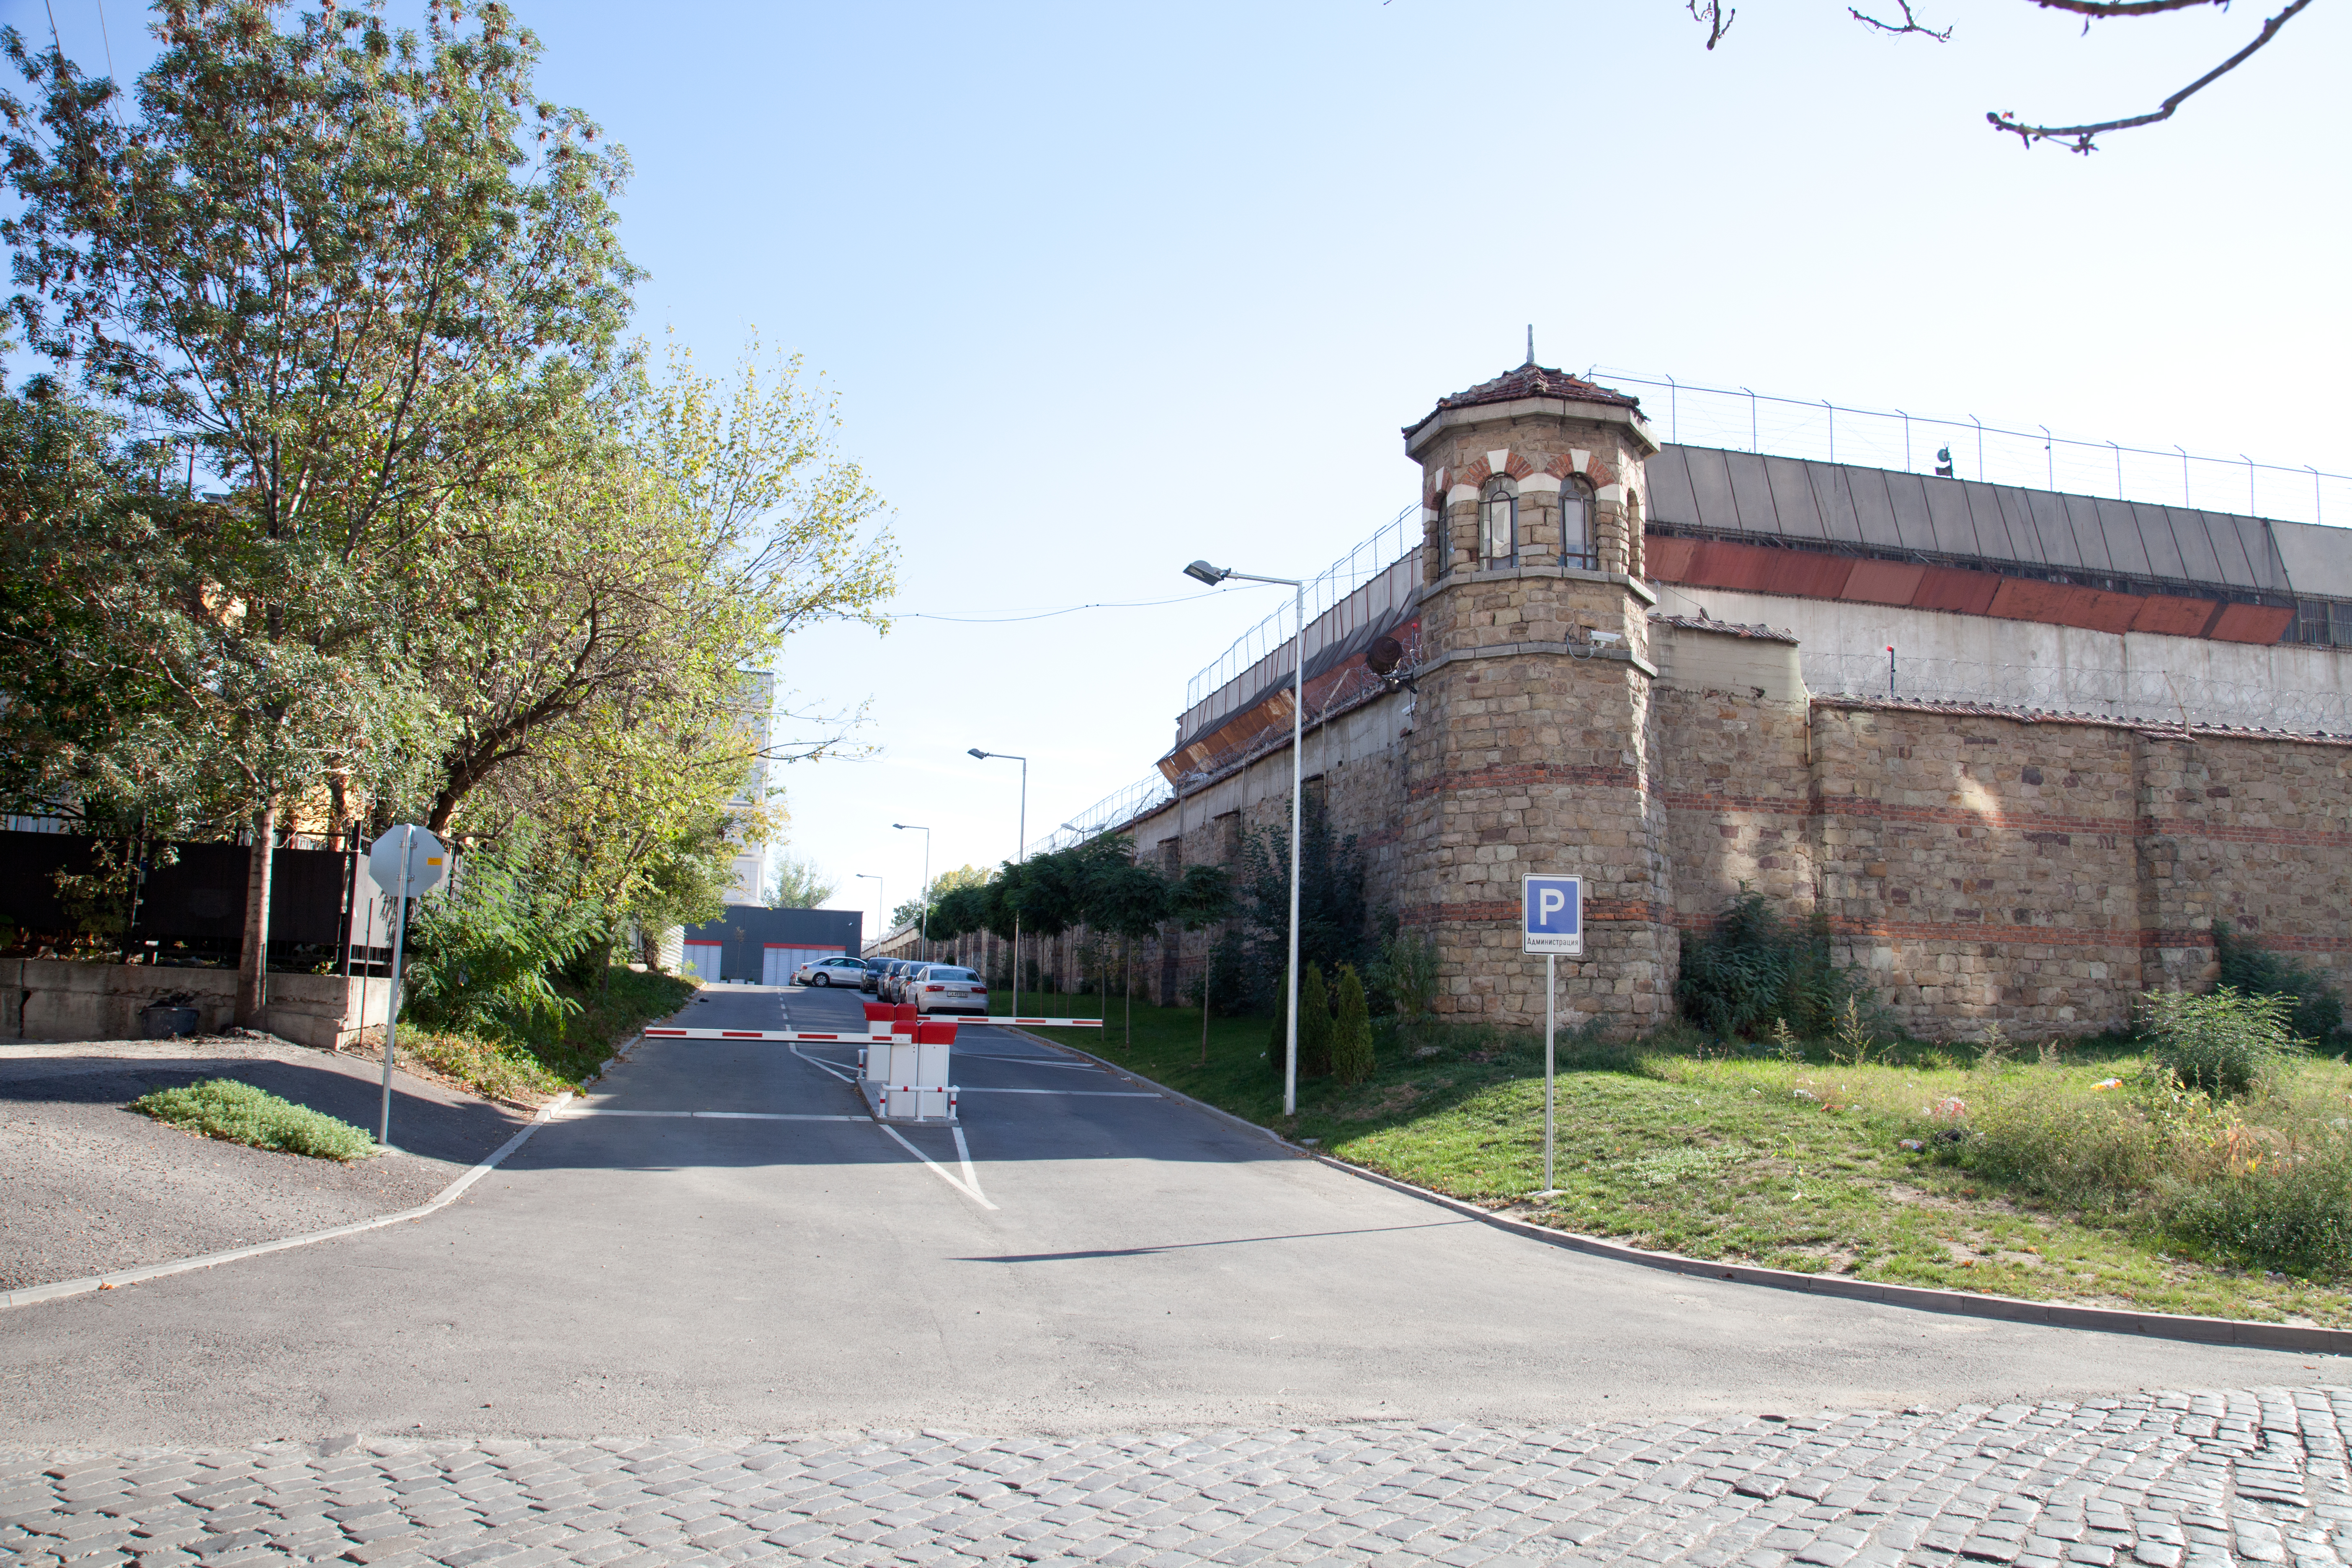 File:Sofia prison, Bulgaria 2012 PD 02.jpg - Wikimedia Commons